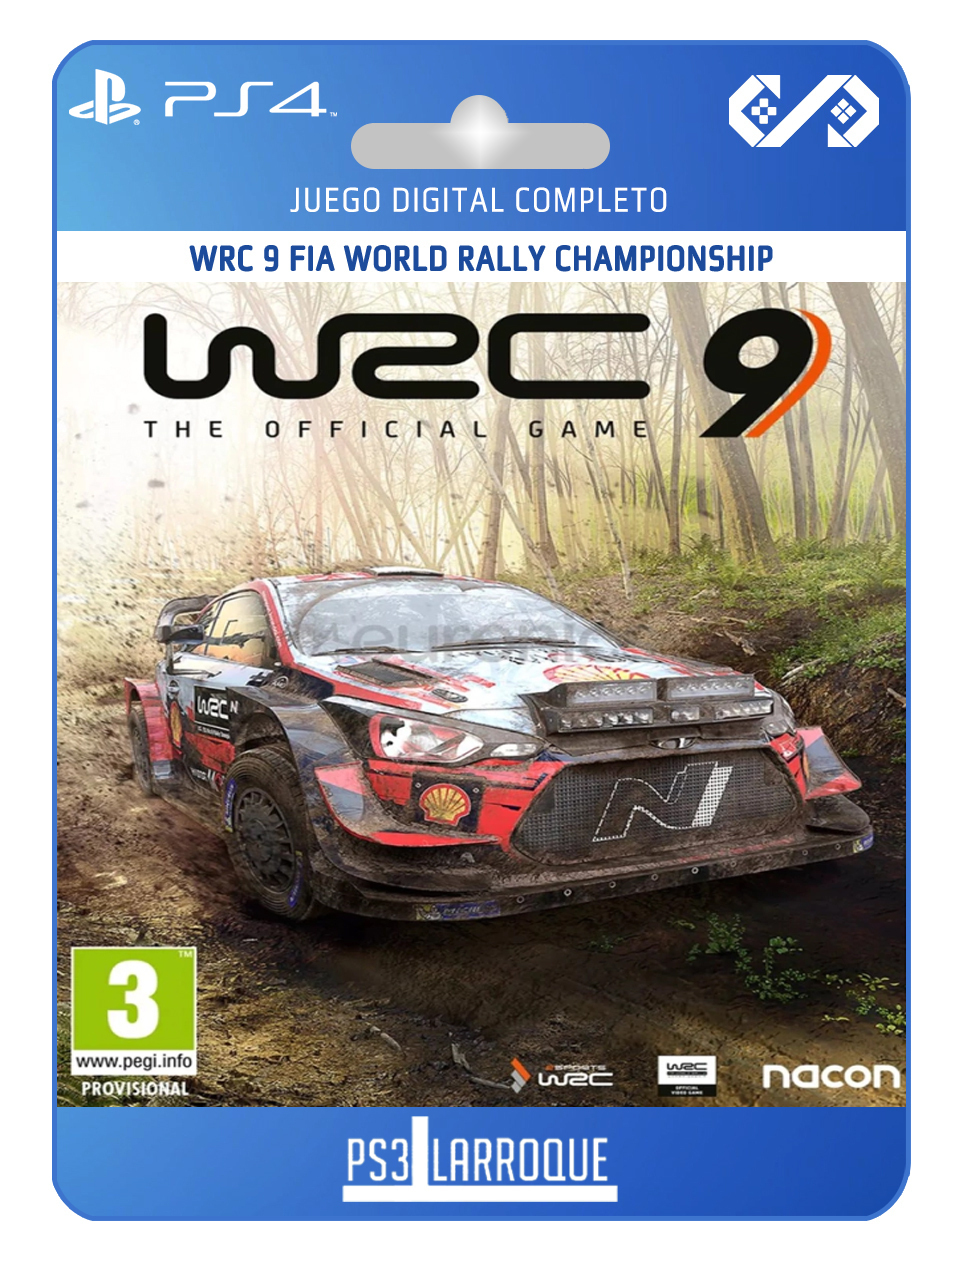 WRC 9 FIA WORLD RALLY CHAMPIONSHIP - Ps3 Larroque